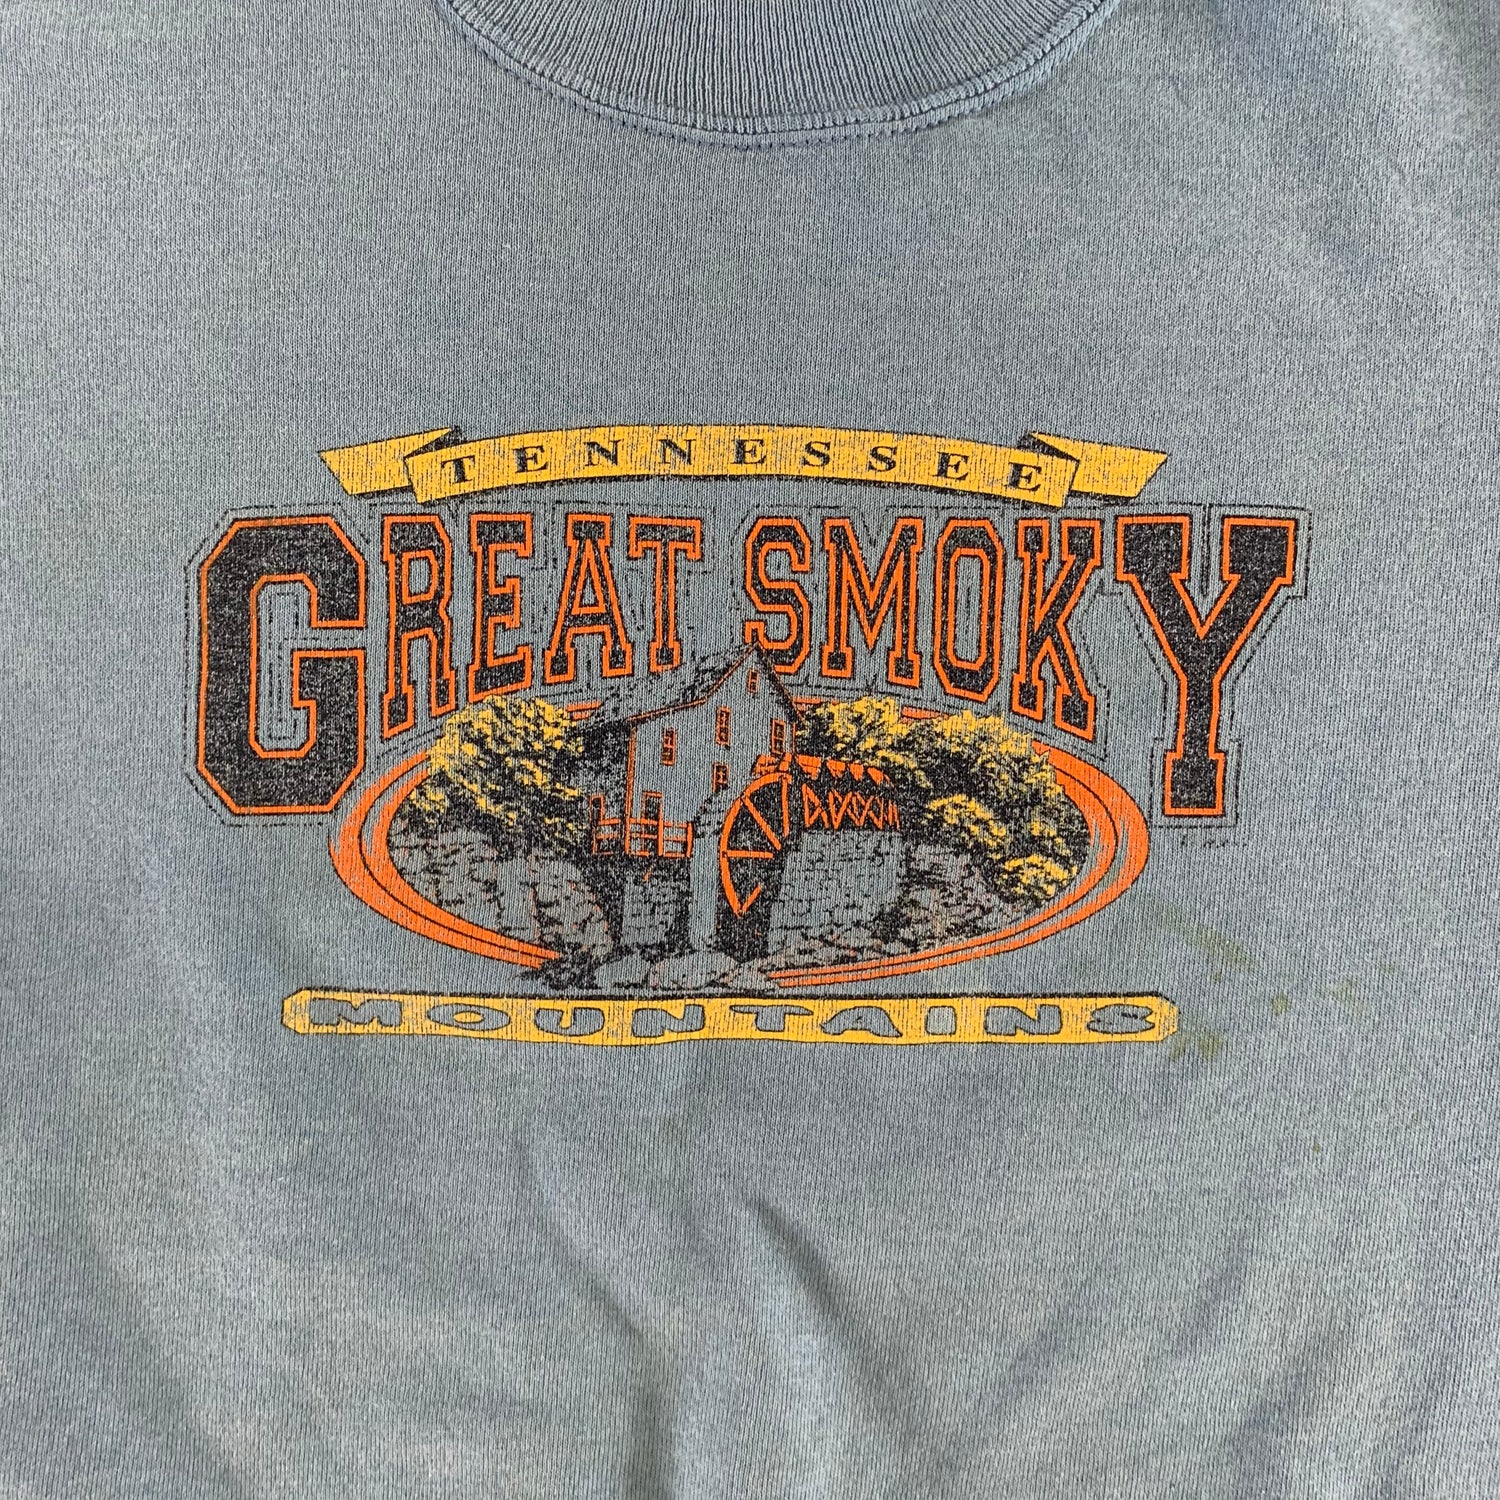 Vintage 1990s Great Smoky Mountains Sweatshirt size Large